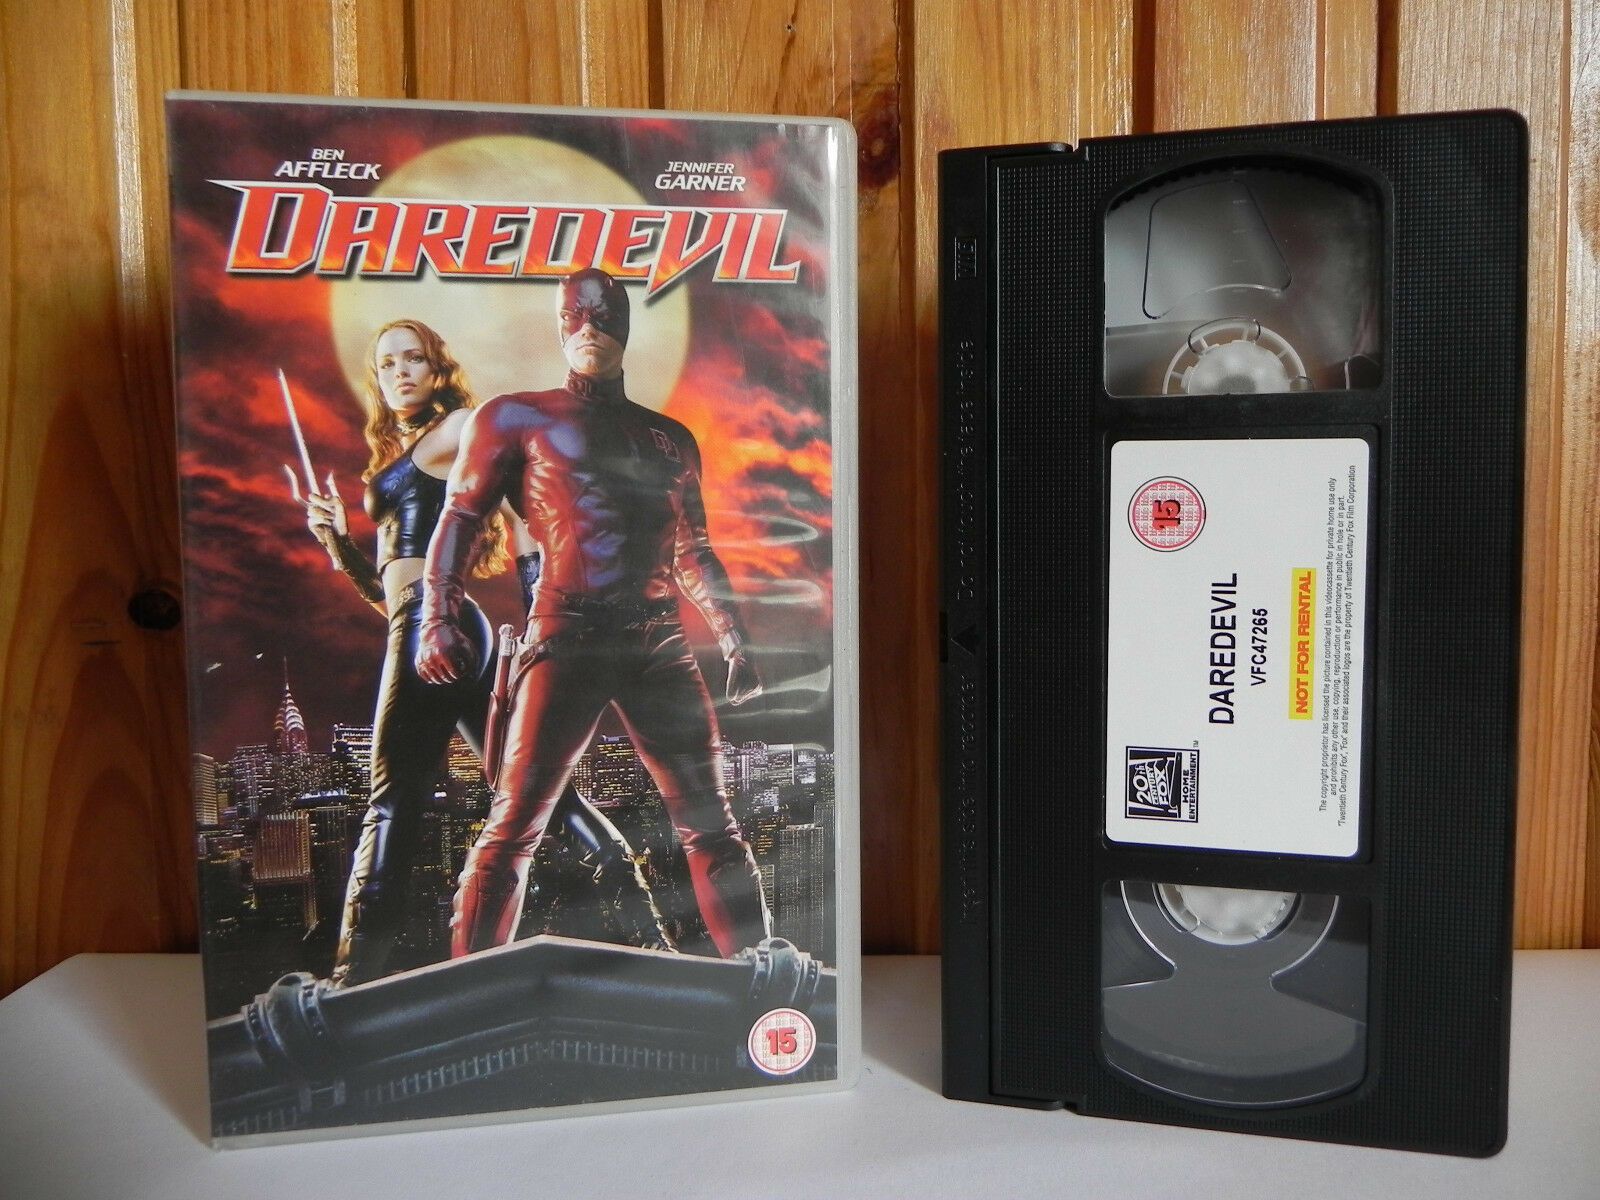 Daredevil - 20th Century Fox - Action - Ben Affleck - Jennifer Garner - Pal VHS-